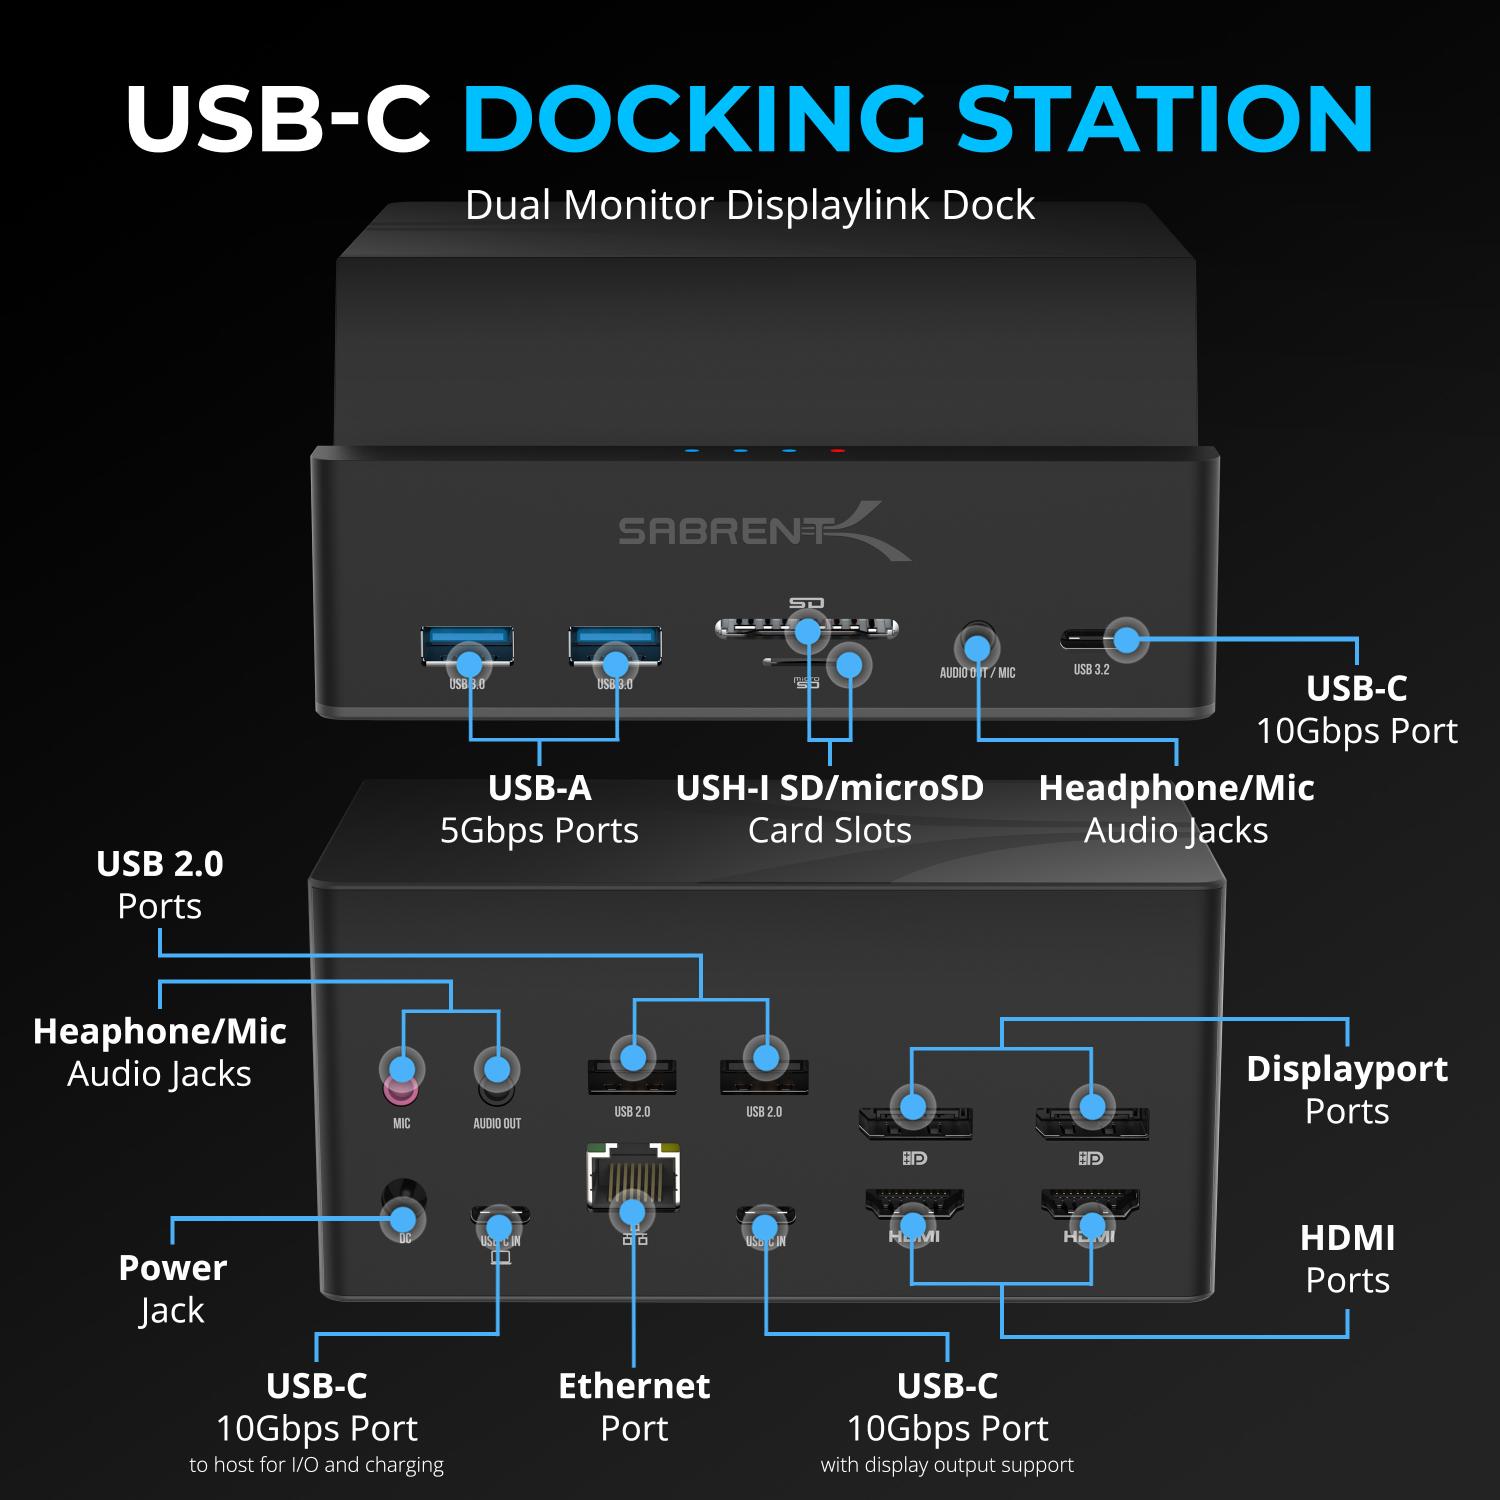 USB-C Universal Docking Station, Dual Monitor Displaylink Dock - Sabrent